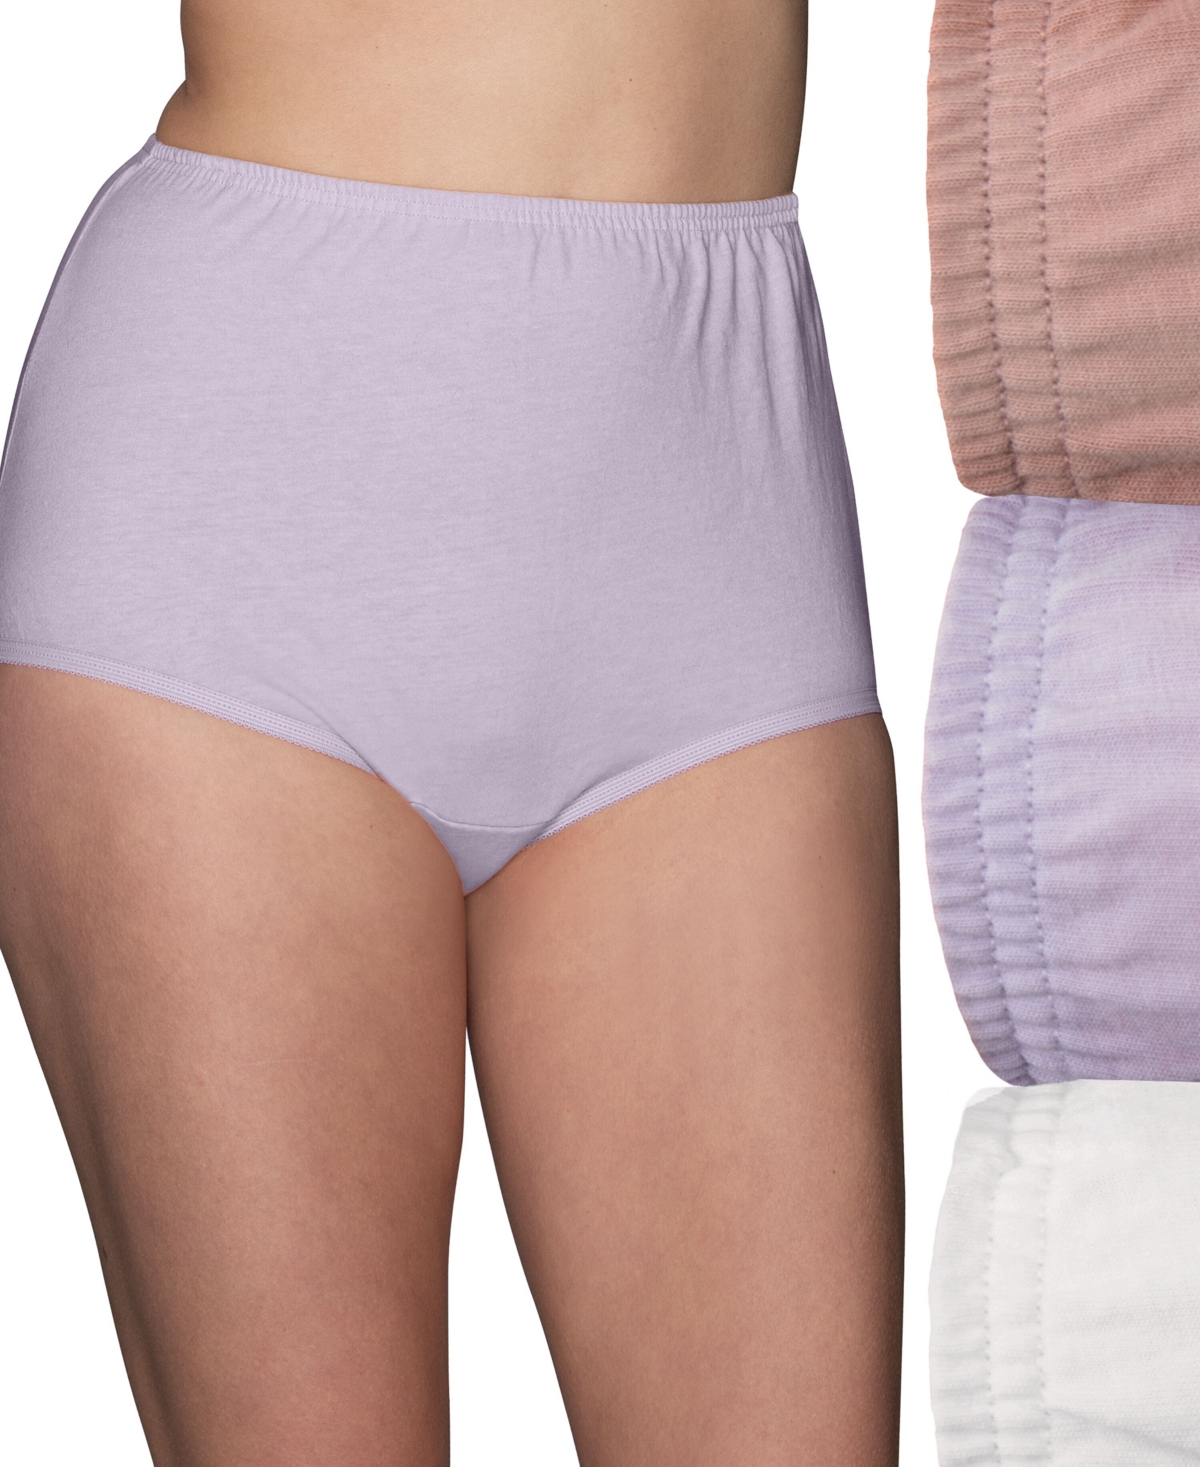 Women's 3-Pk. Perfectly Yours Cotton Brief Underwear 15320 - Lavender/Blush/White